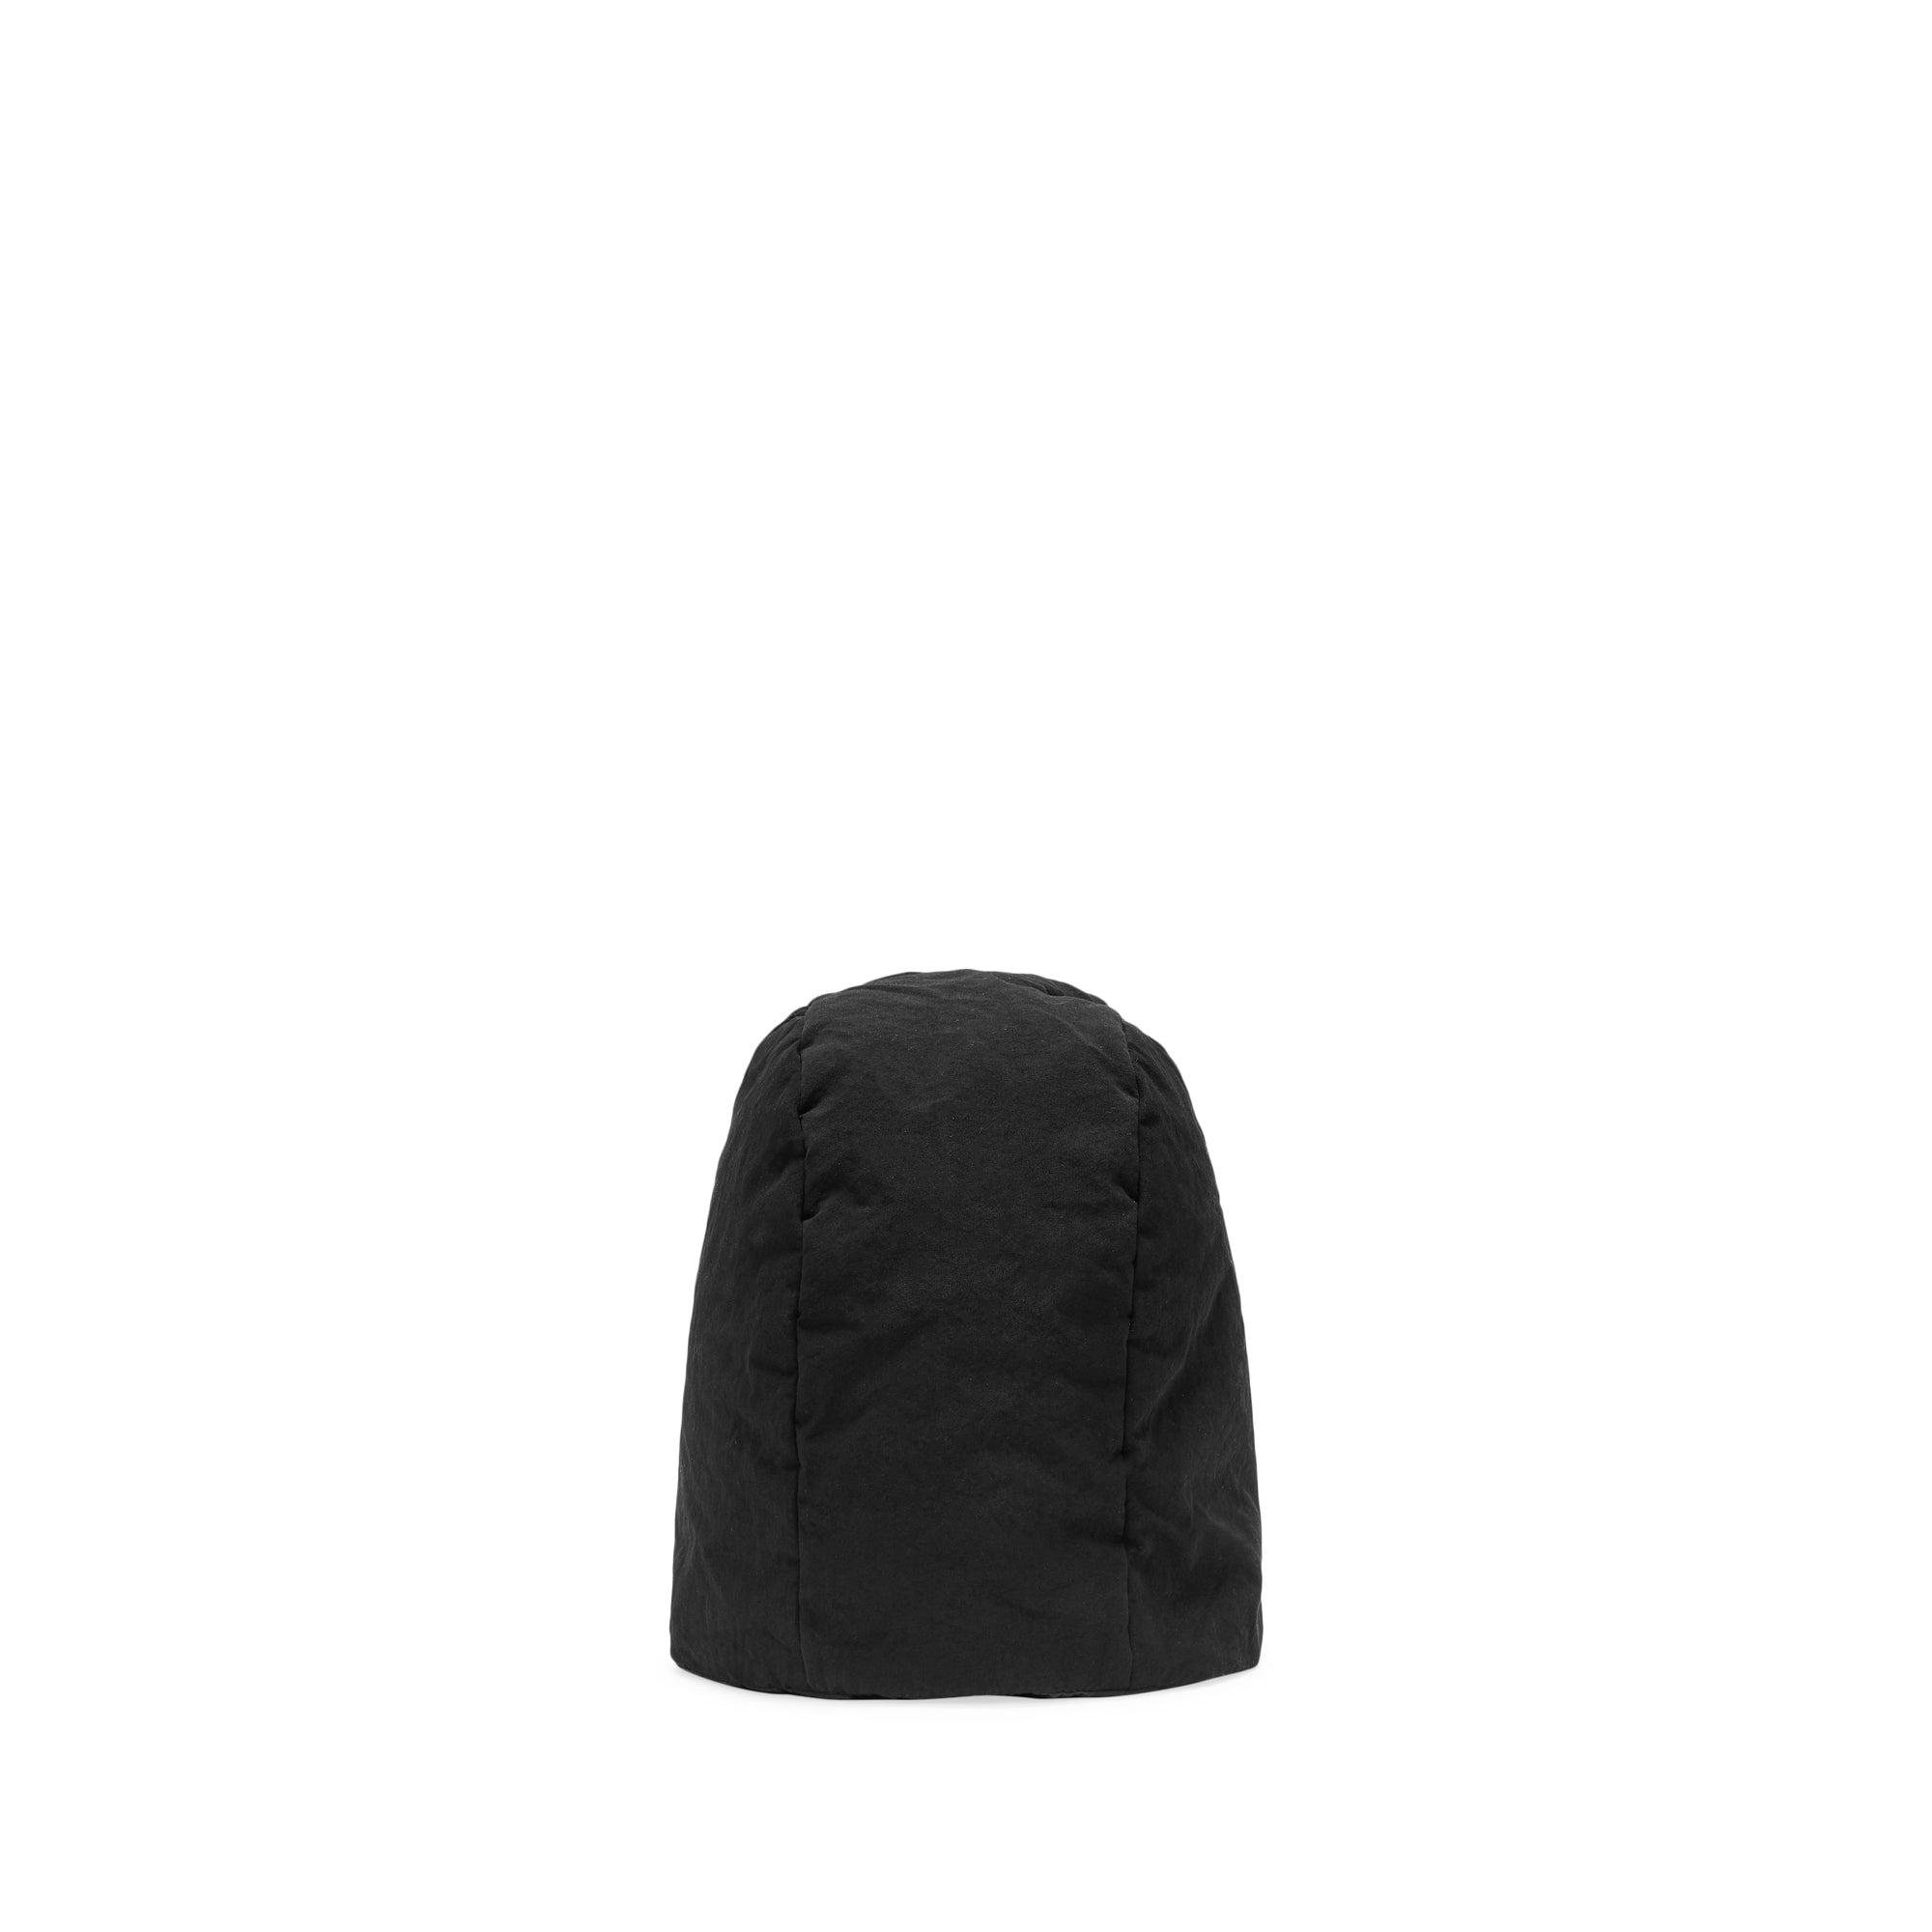 Casey Casey - Men’s One Paper Cotton Hat - (Black) by CASEY CASEY